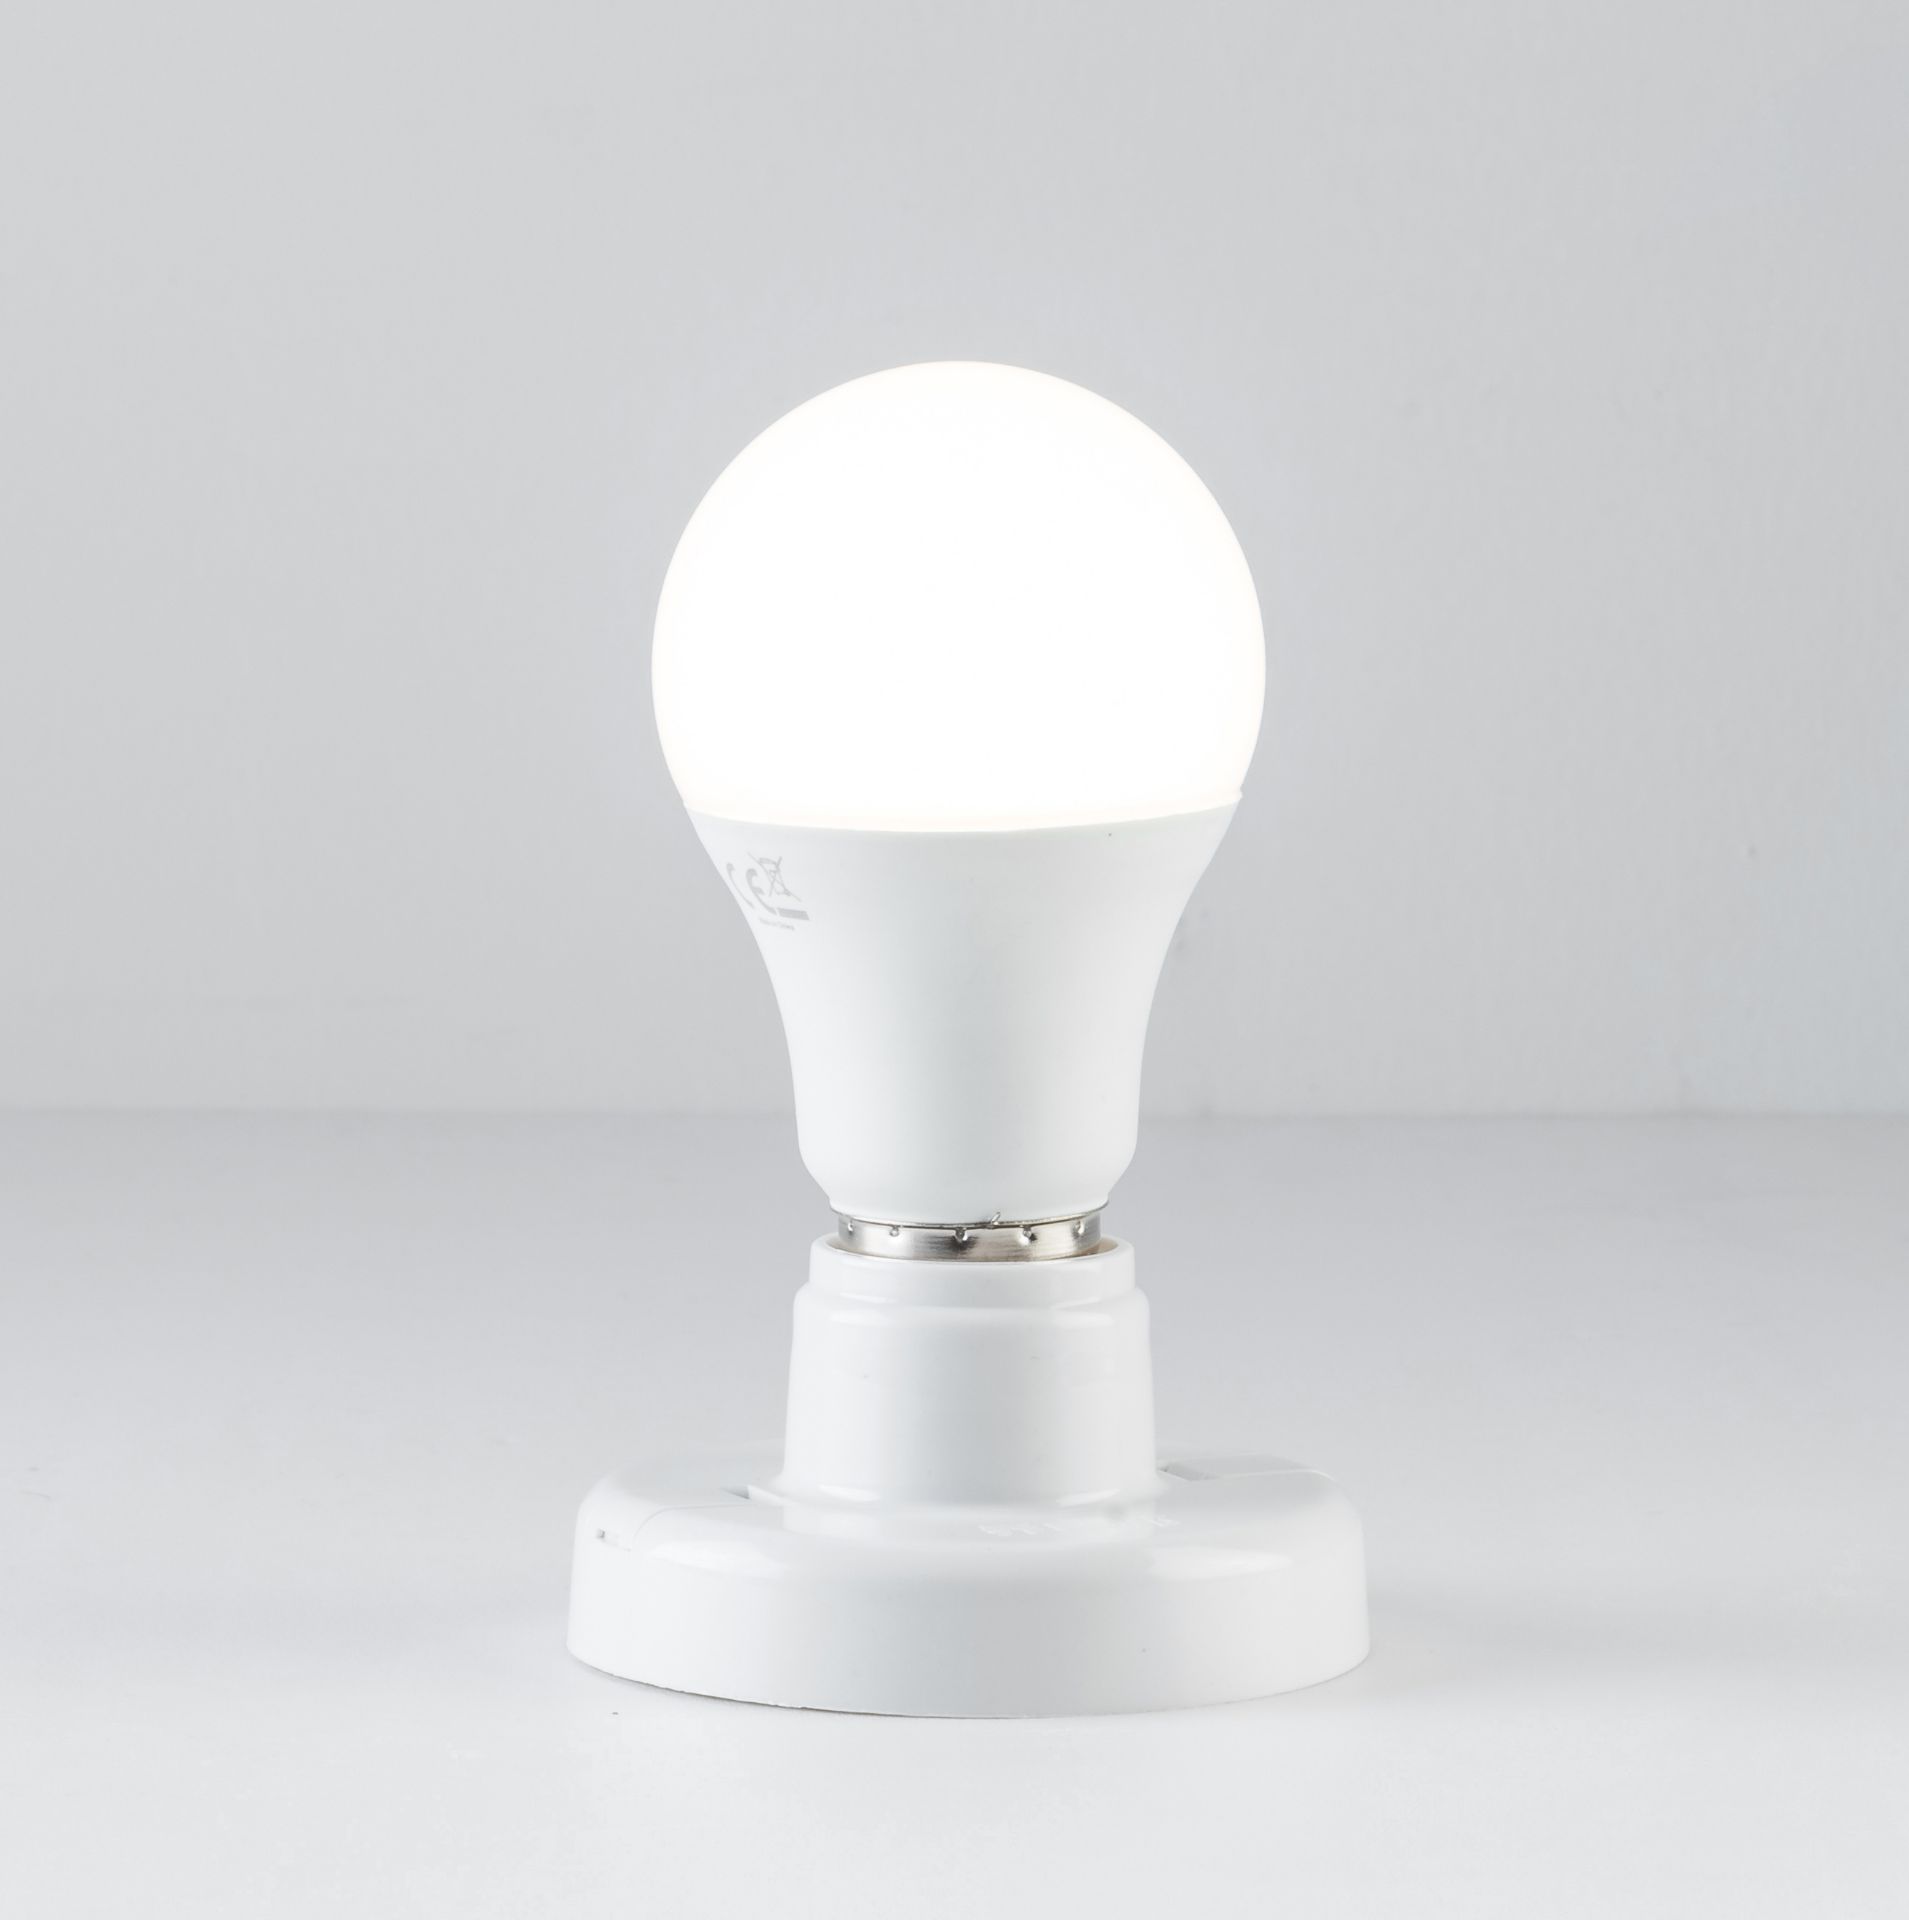 Pack of 20 LED Bulbs 12W E27 A60 3000K Warm White, 60 Bulbs - Image 3 of 3